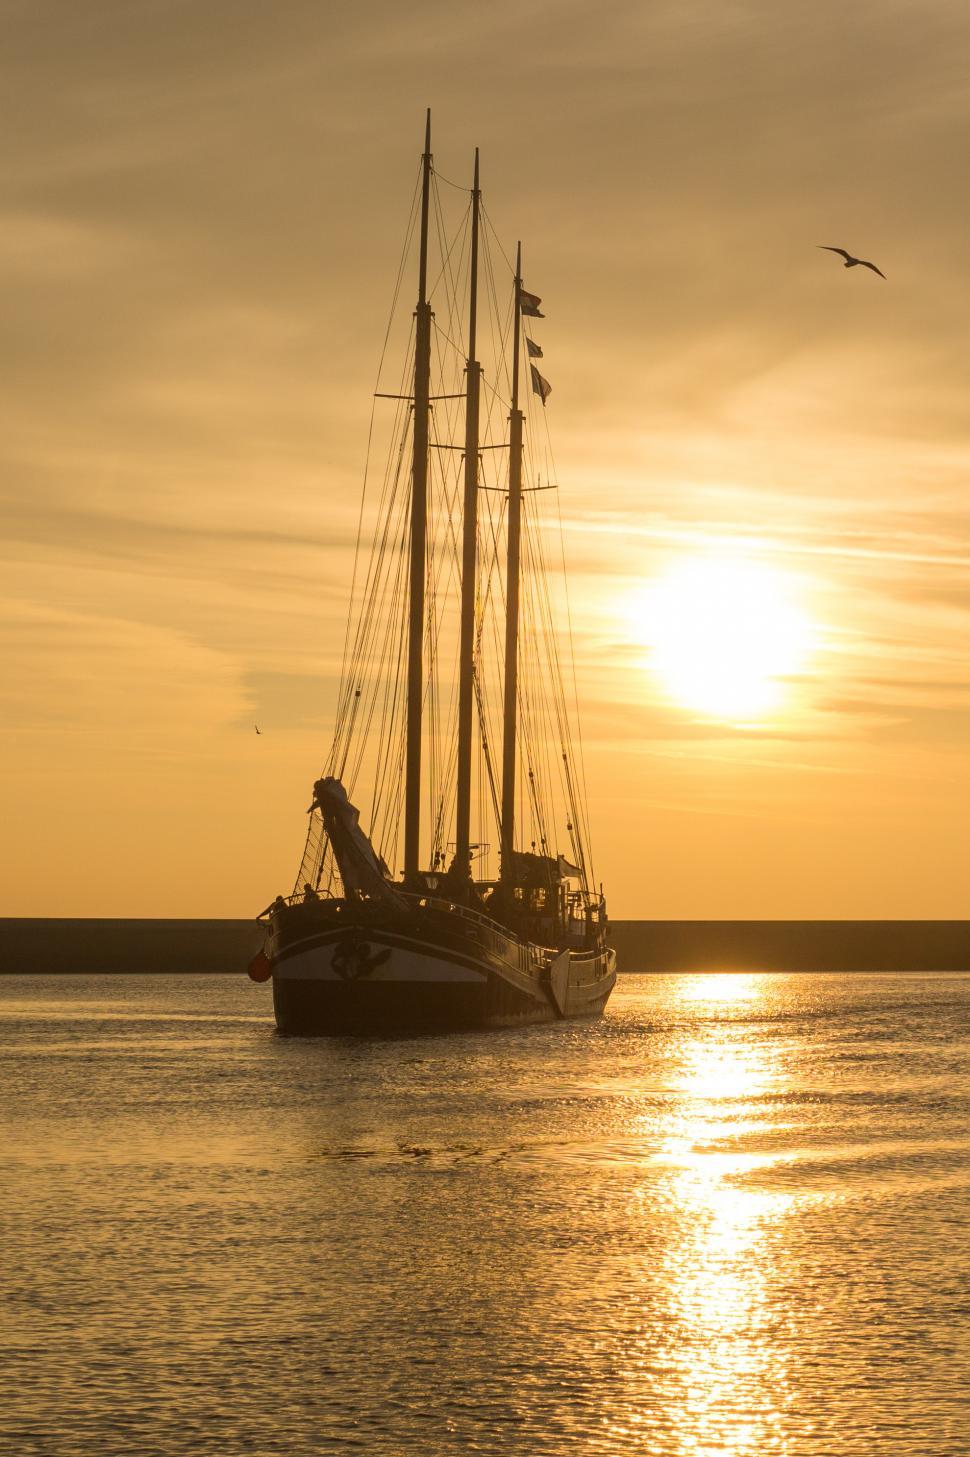 Free Image of Sailboat Sailing on Water at Sunset 